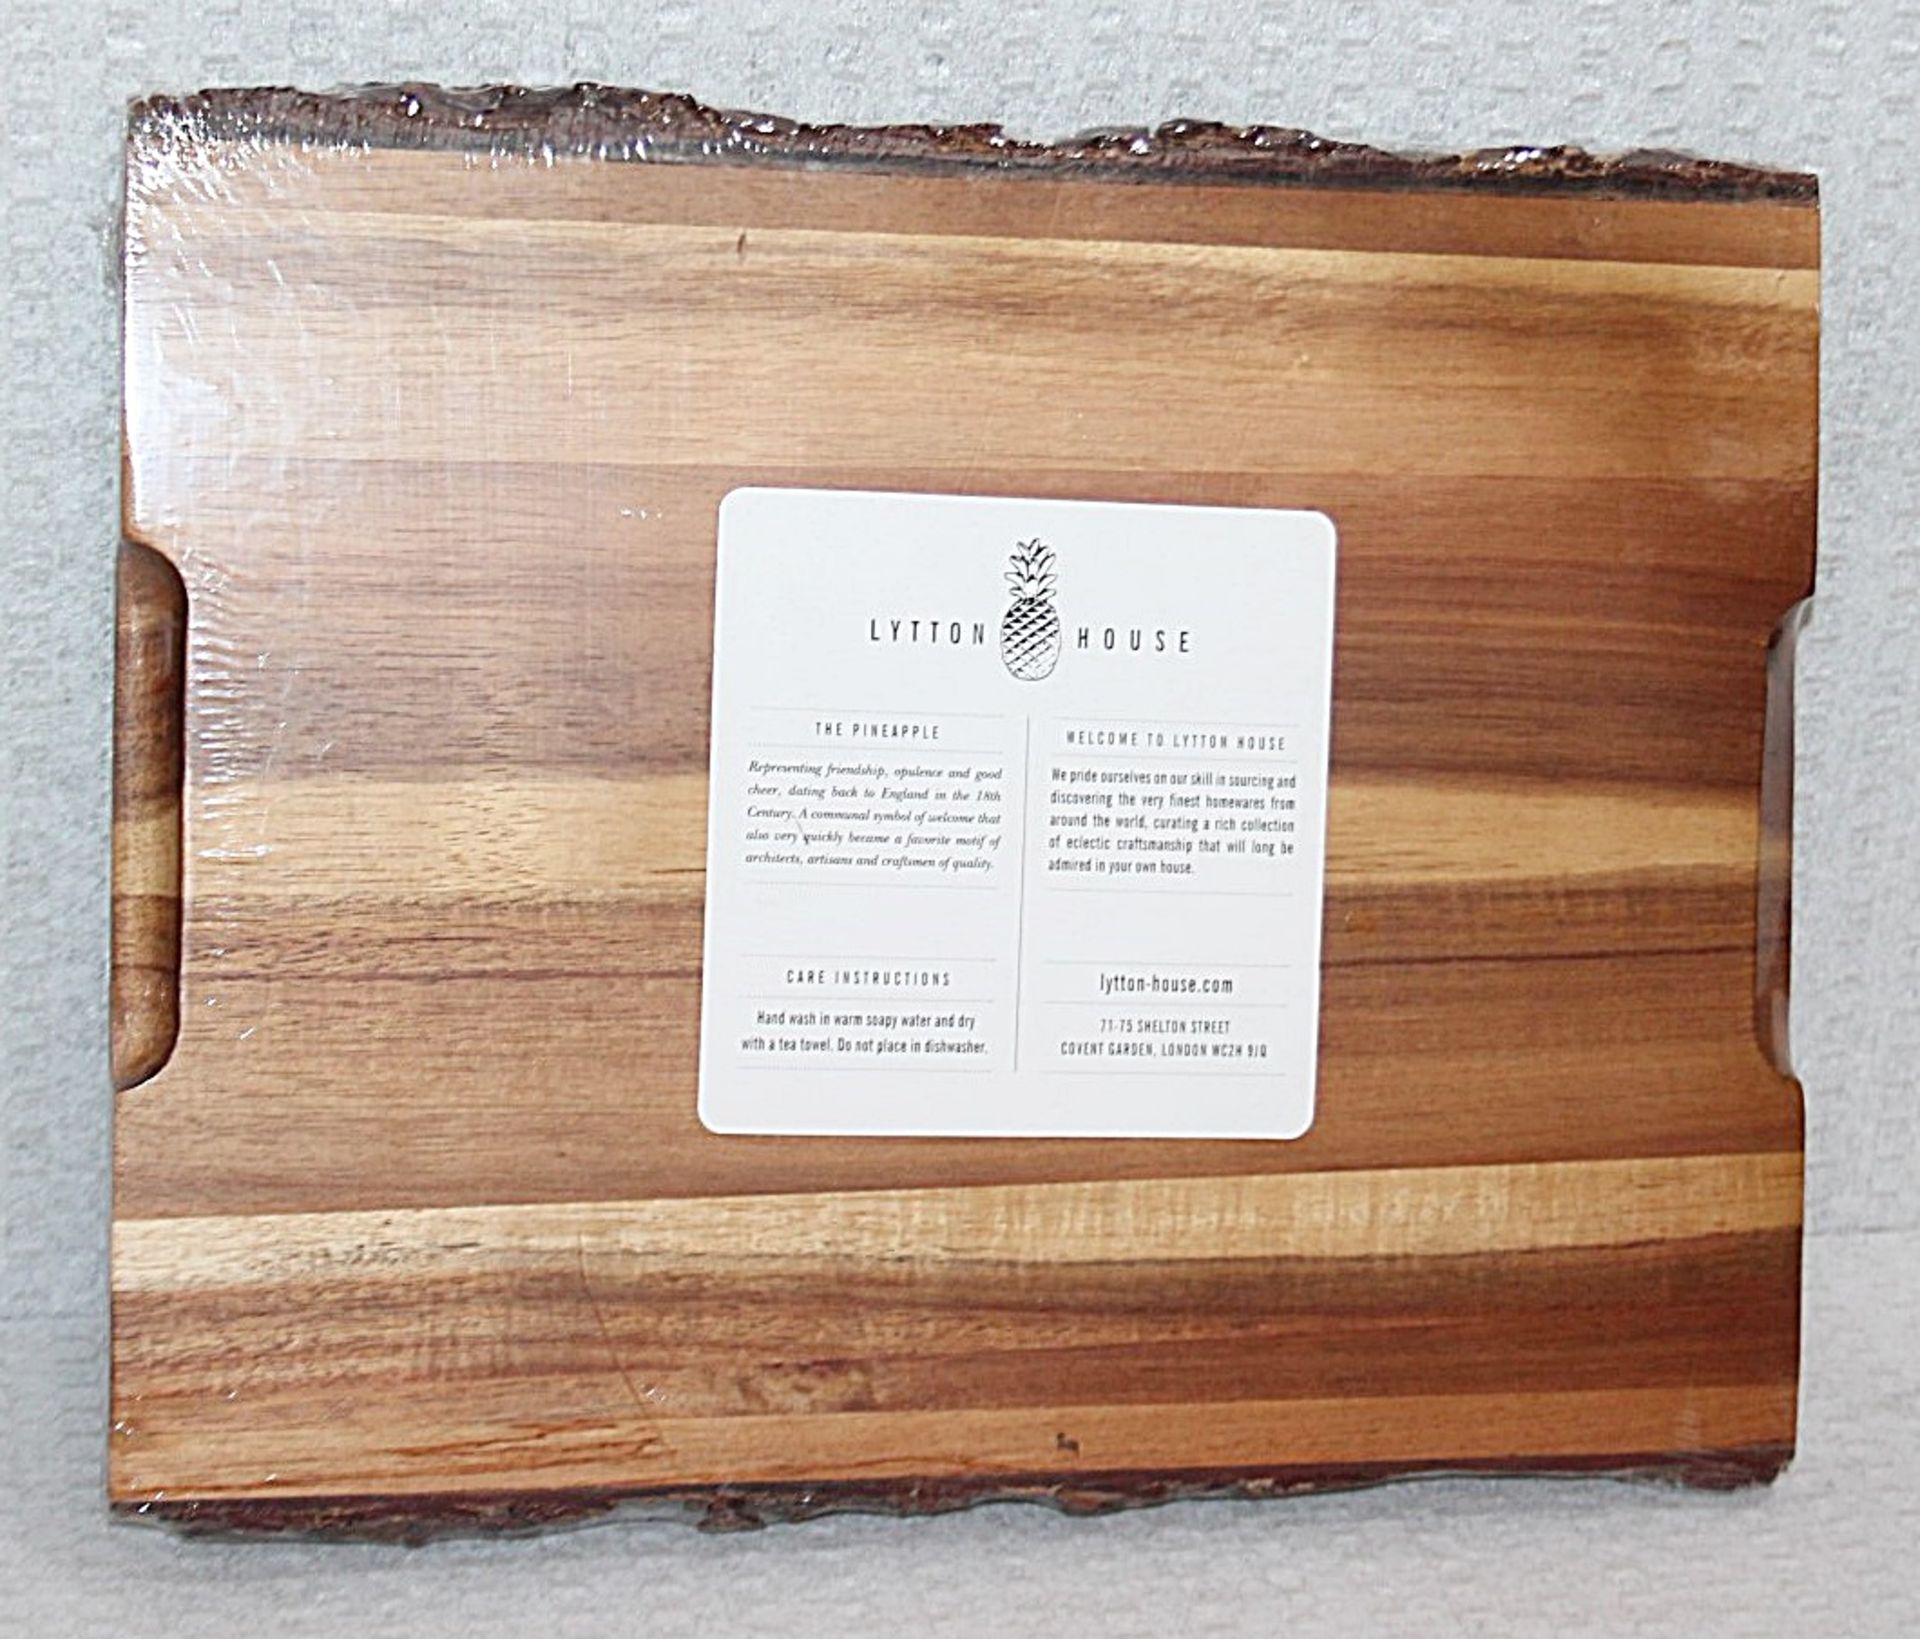 1 x LYTTON HOUSE Luxury Solid Wood & Slate Rectangular Cheese Board Set - Sealed Stock *NO RESERVE* - Image 3 of 4